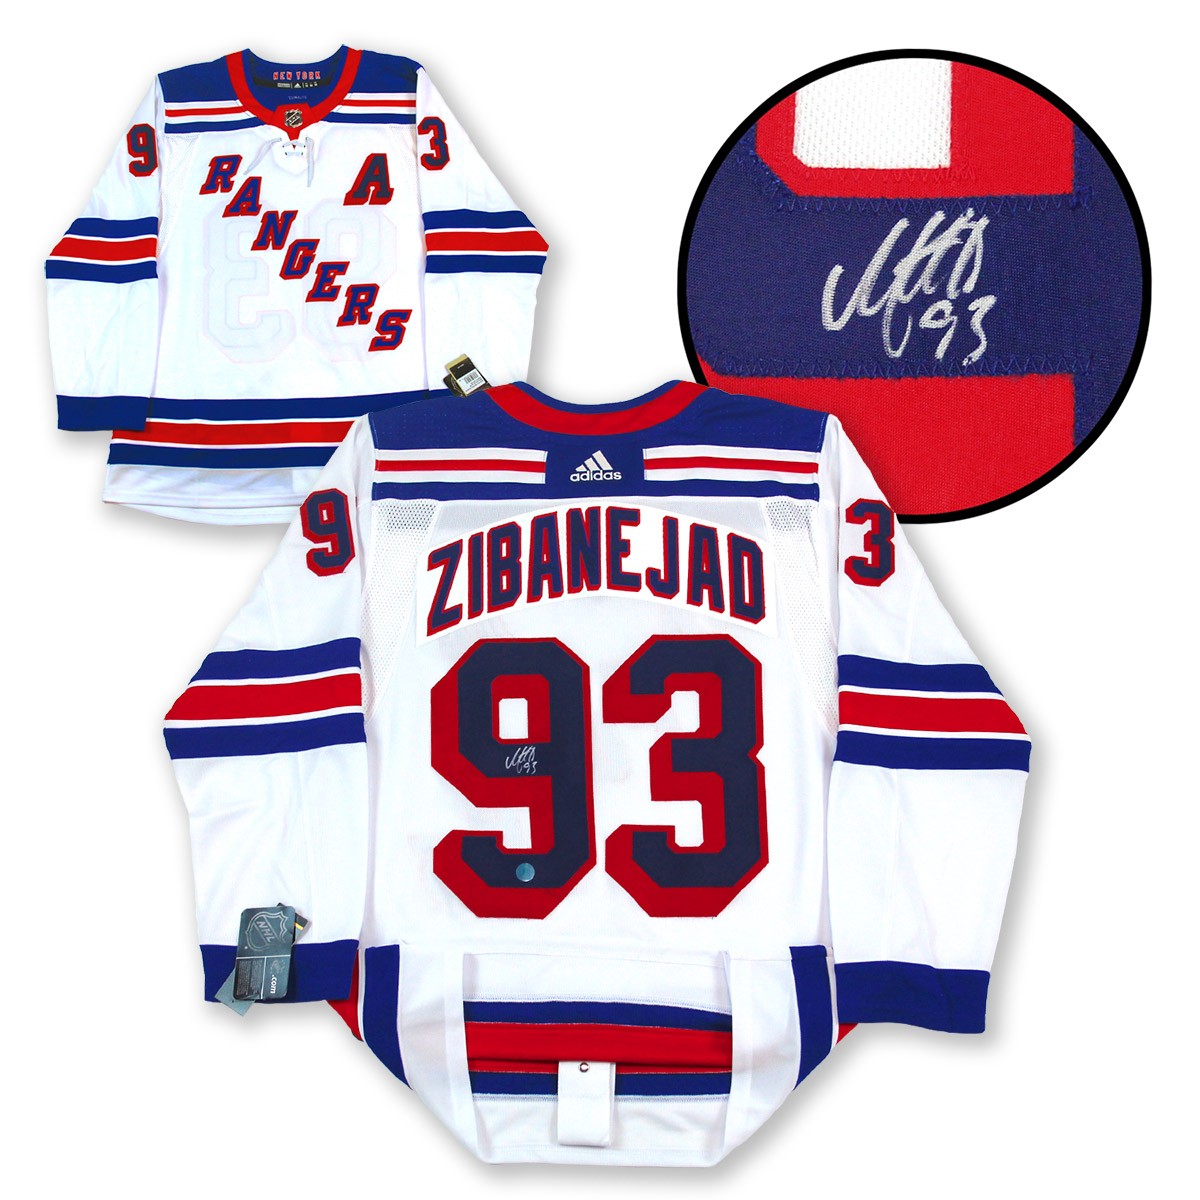 Mika Zibanejad New York Rangers Men's Adidas Authentic Hockey